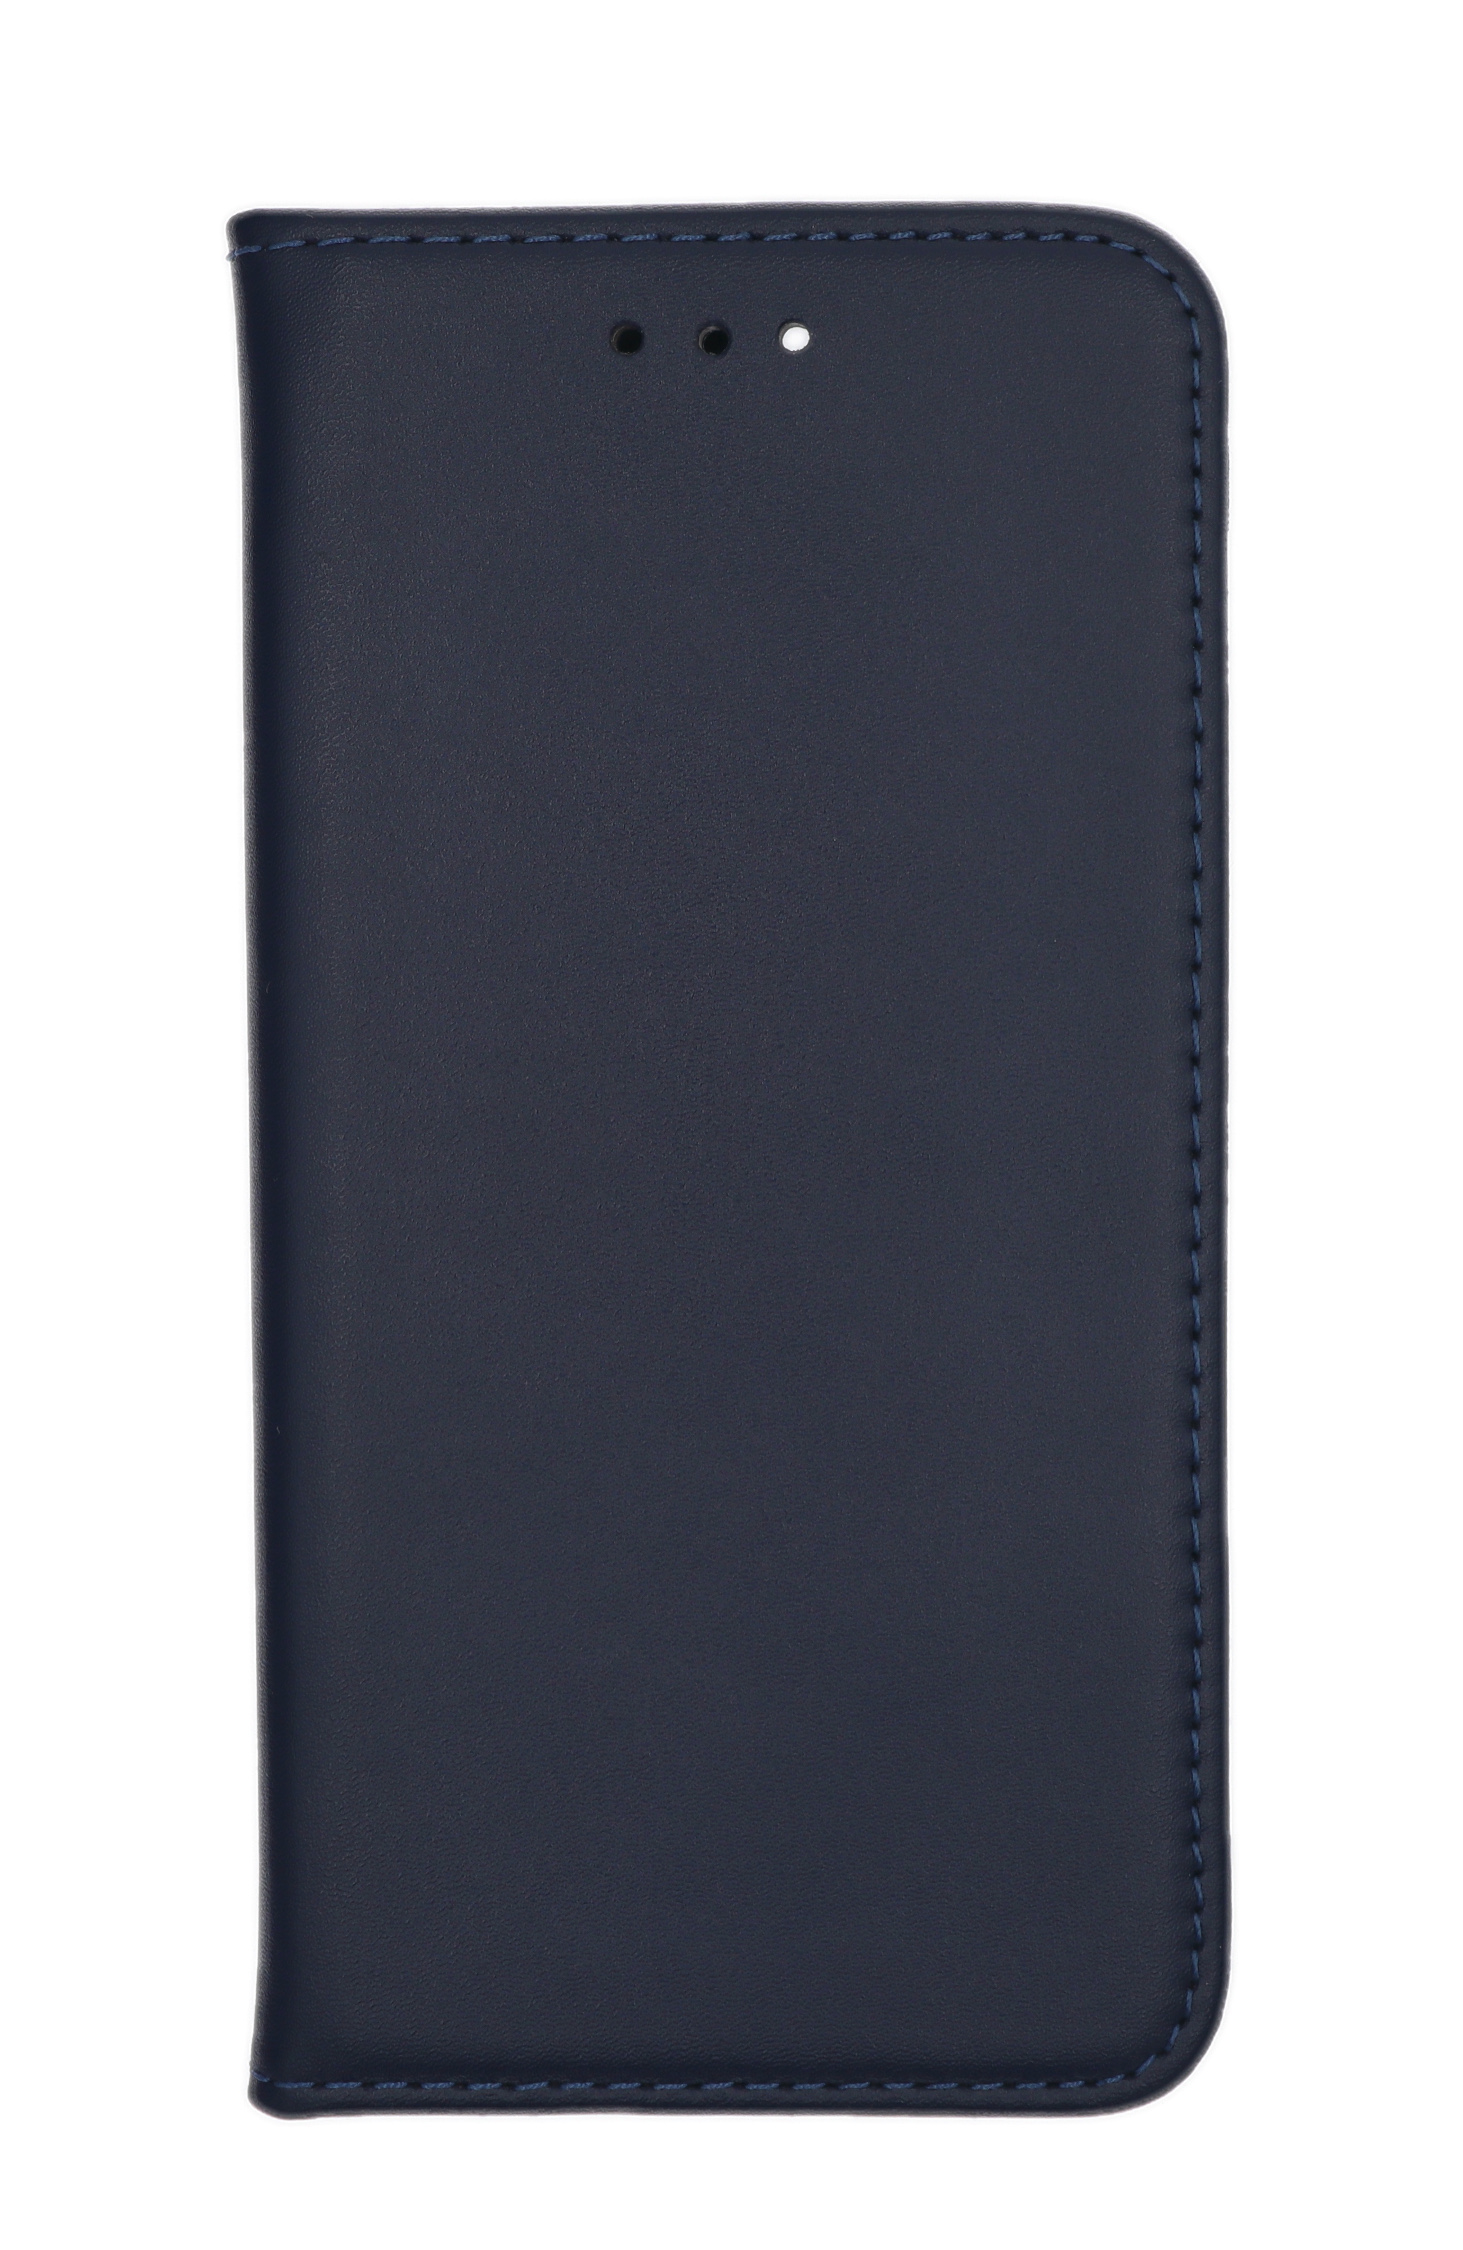 JAMCOVER Echt Leder Bookcase, S23, Galaxy Marineblau Bookcover, Samsung